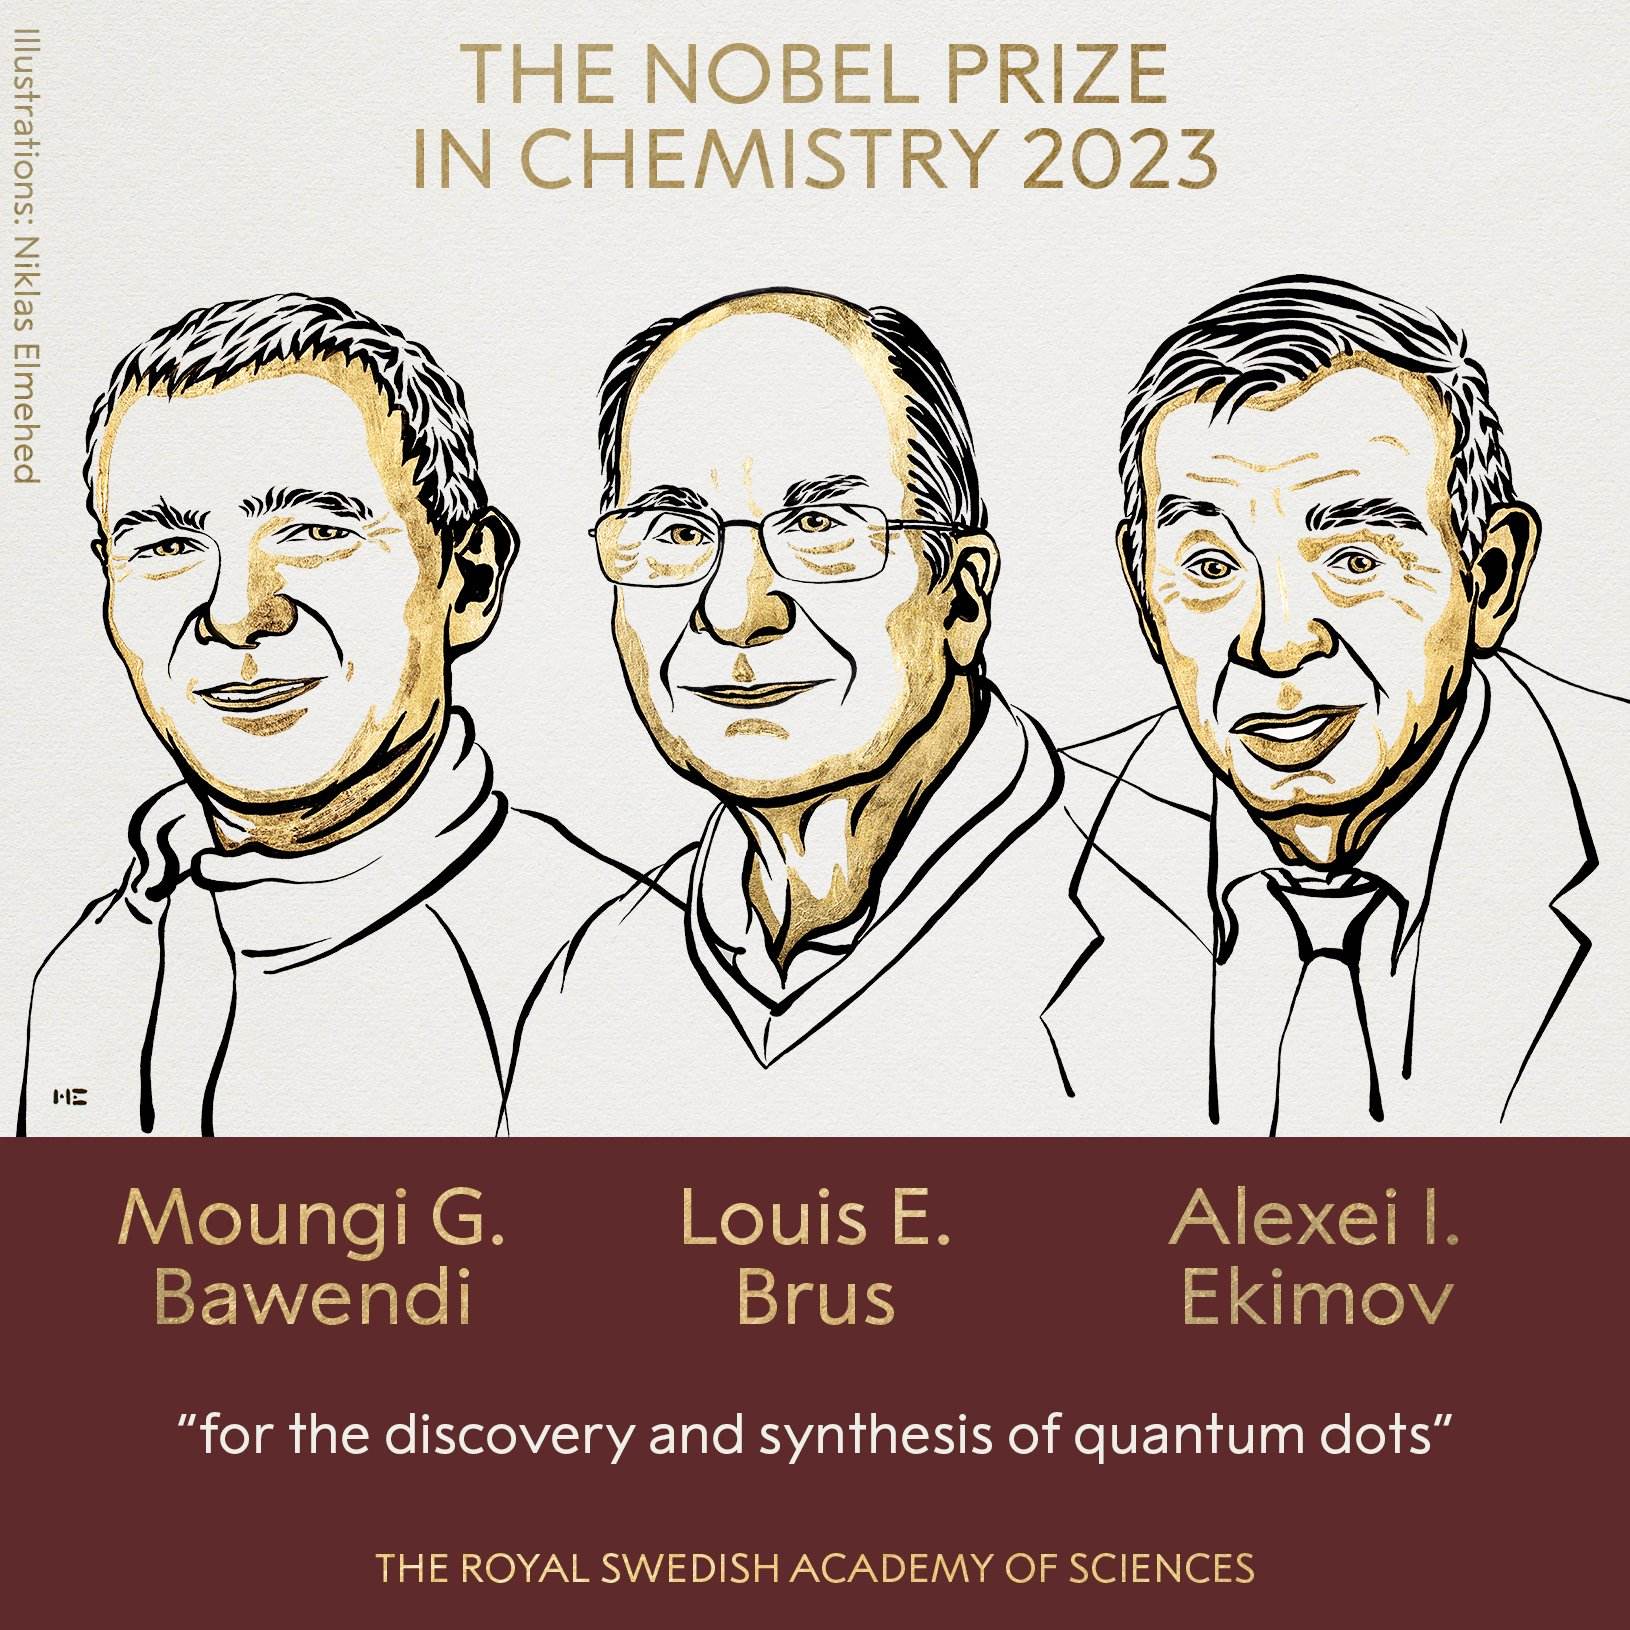 Moungi G. Bawendi, Louis E. Brus i Alexei I. Ekimov reben el Nobel de Química 2023